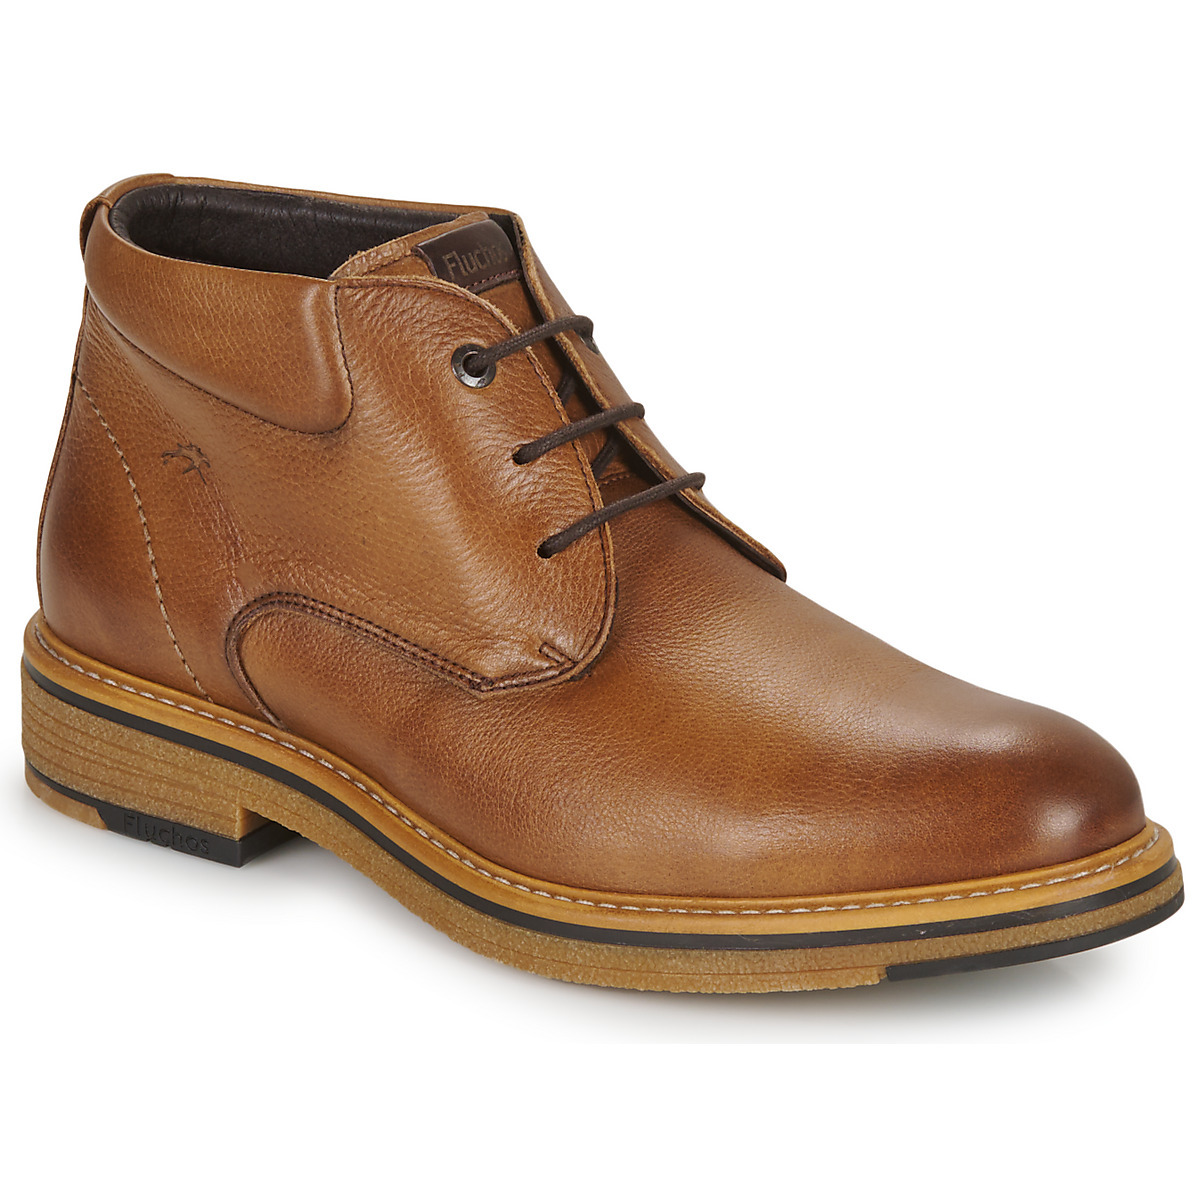 Fluchos - Gents Brown Boots at Spartoo GOOFASH